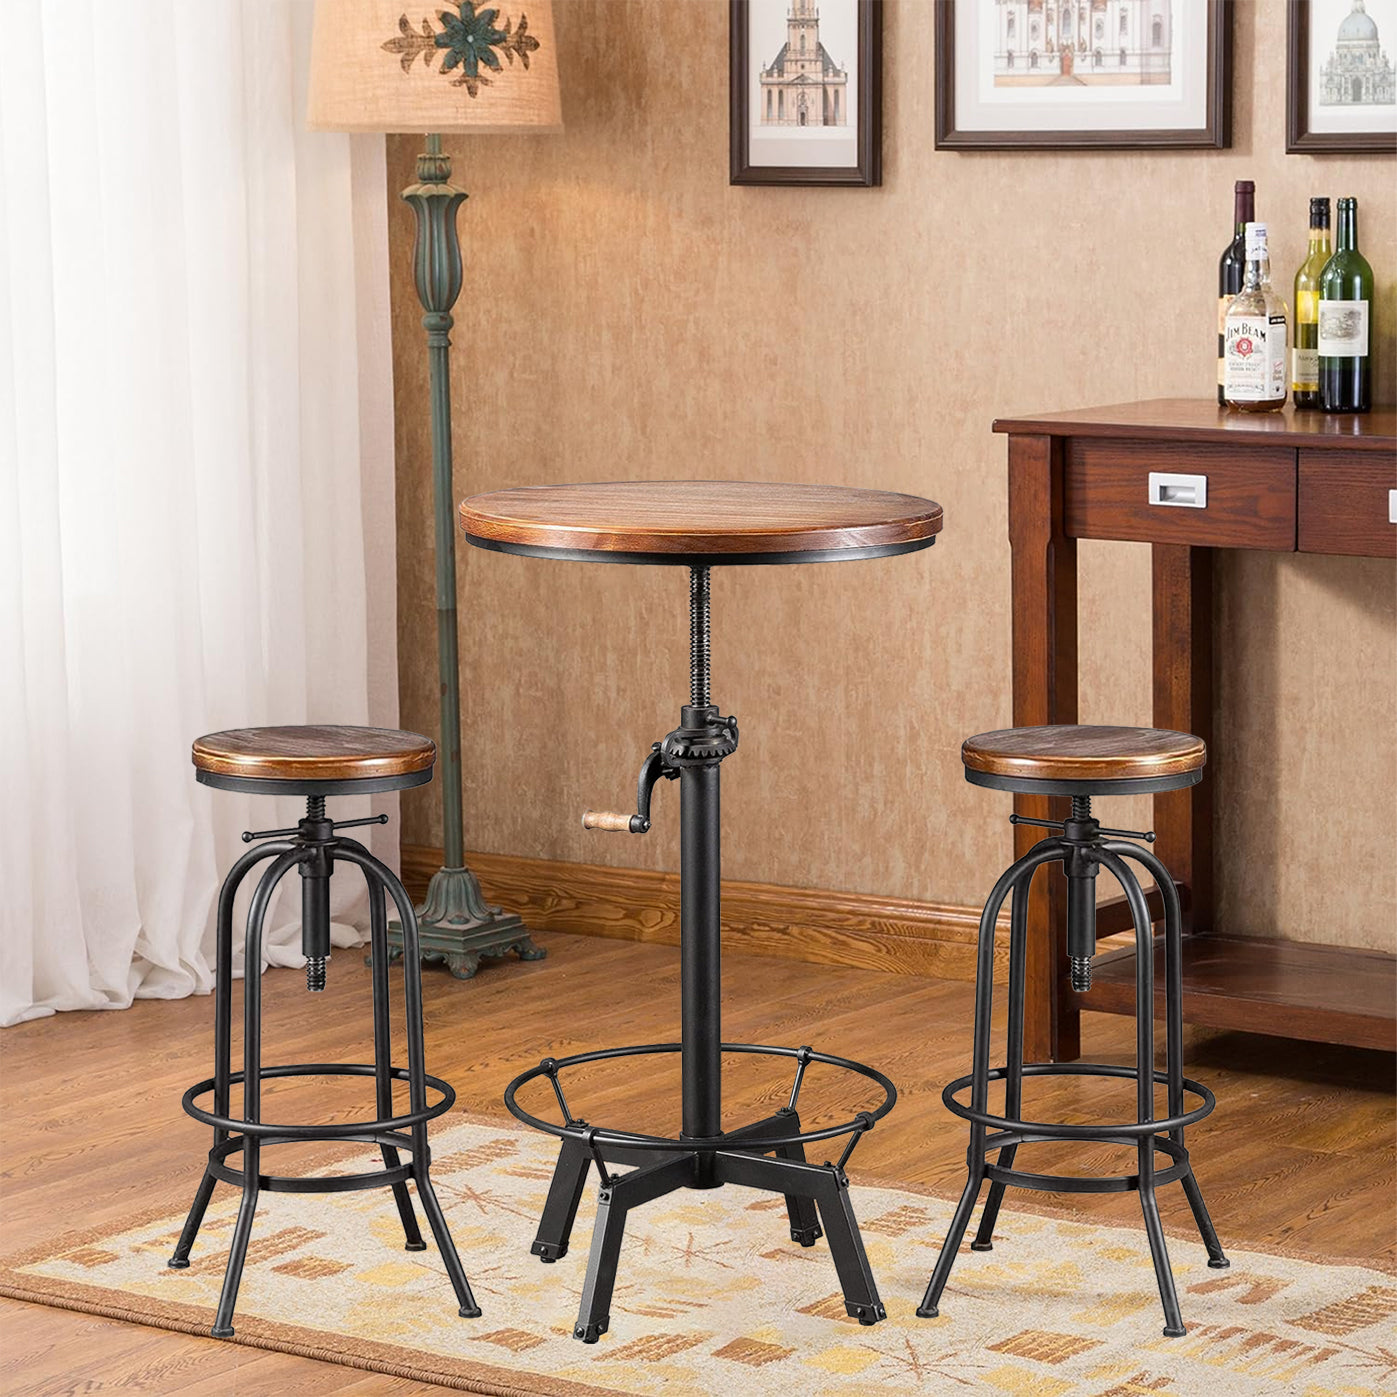 Crank Bar Table Stool Bundle (Table:33.5-39.4 Inch Tall) (Bar Stool:26-32 Inch),Vintage Industrial Style, Both Rotatable Adjustable